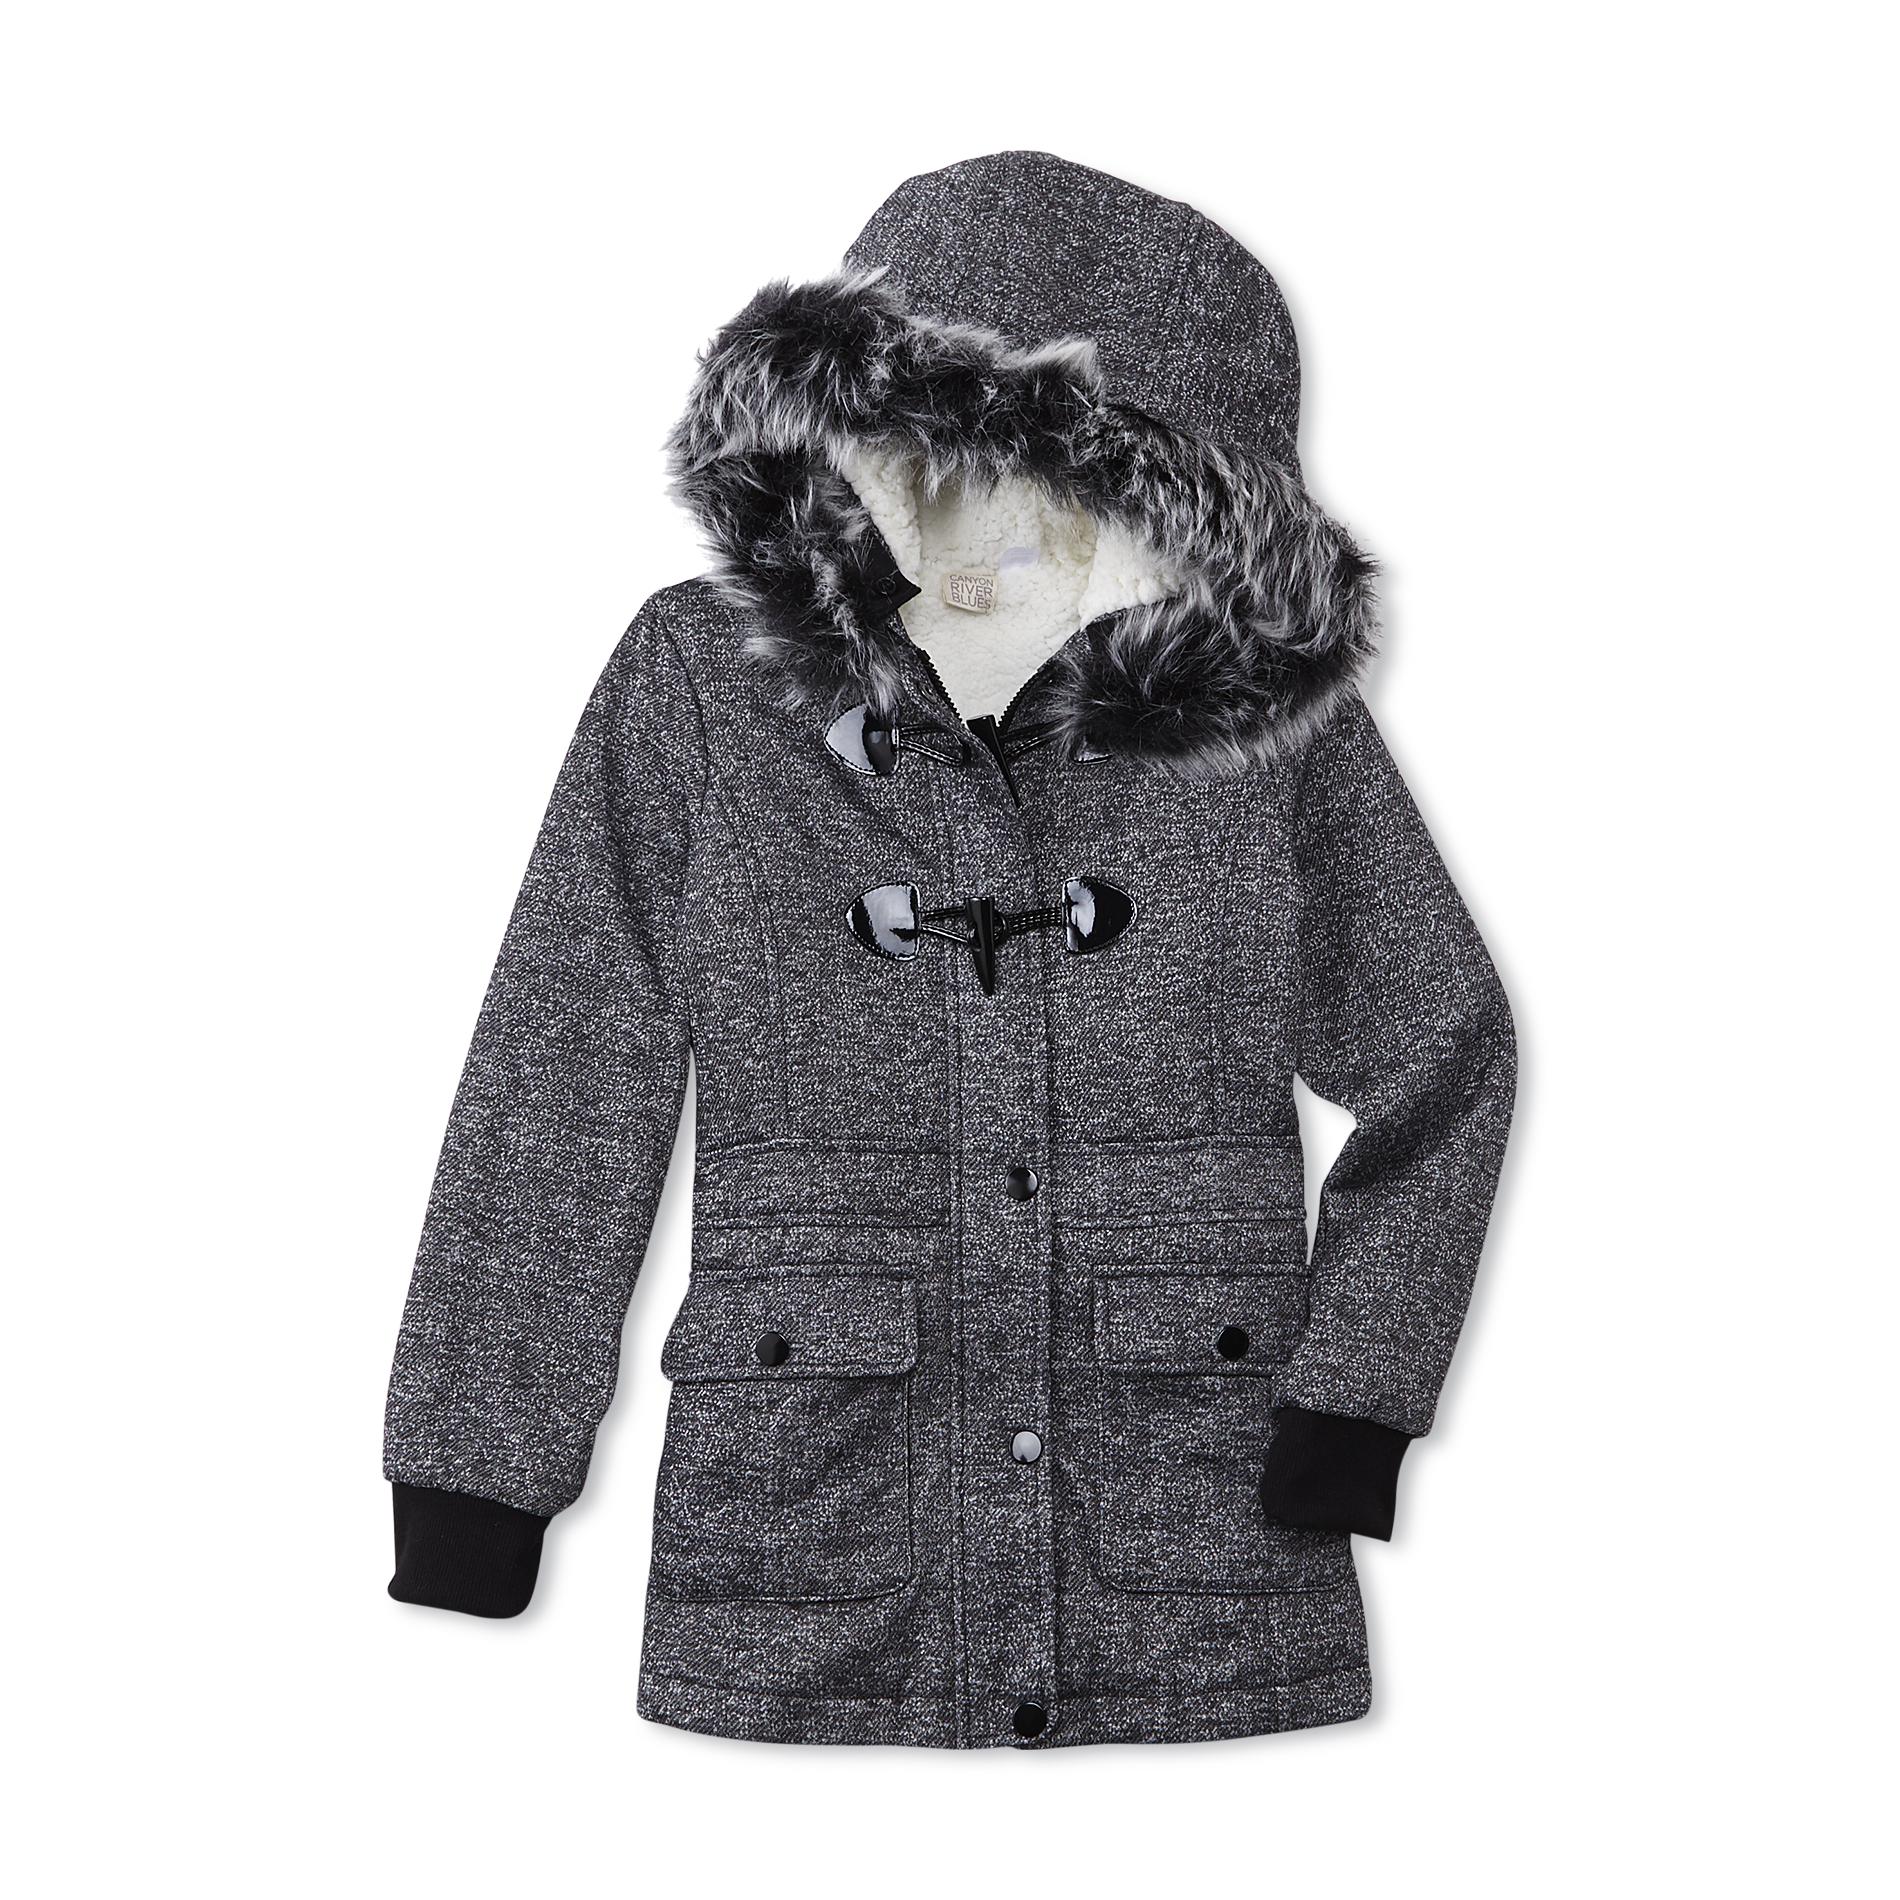 Canyon River Blues Girl's Fleece-Lined Hooded Jacket